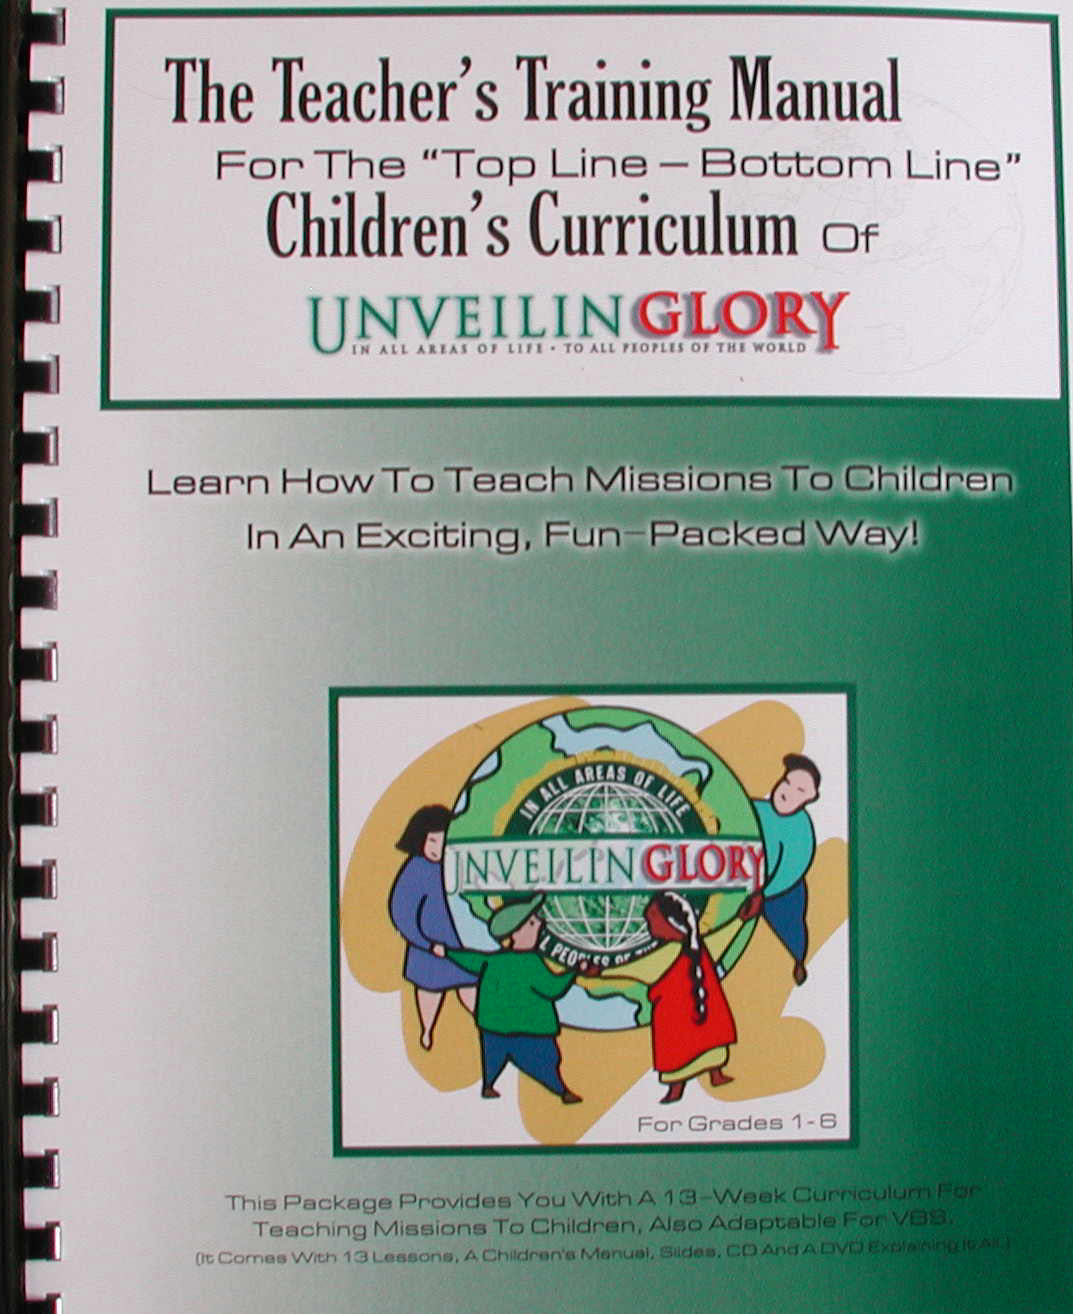 Teacher's Training Manual for the "Top Line - Bottom Line"